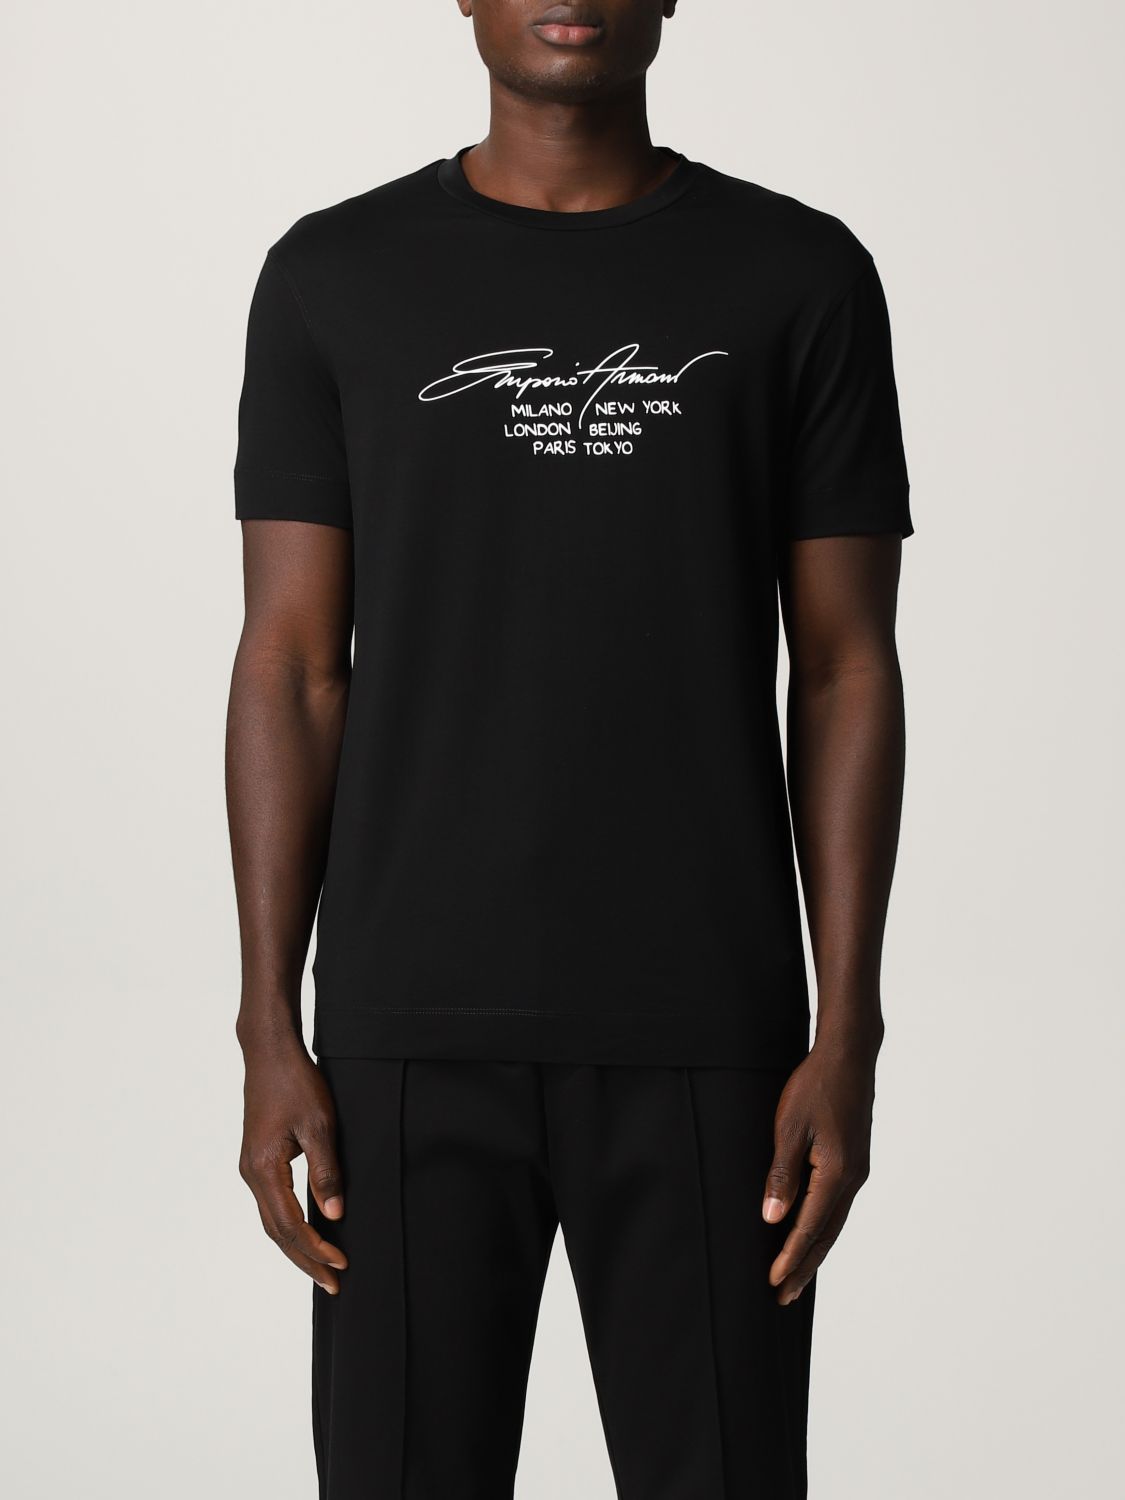 Giorgio armani T-shirt available on Monti Boutique - 51114